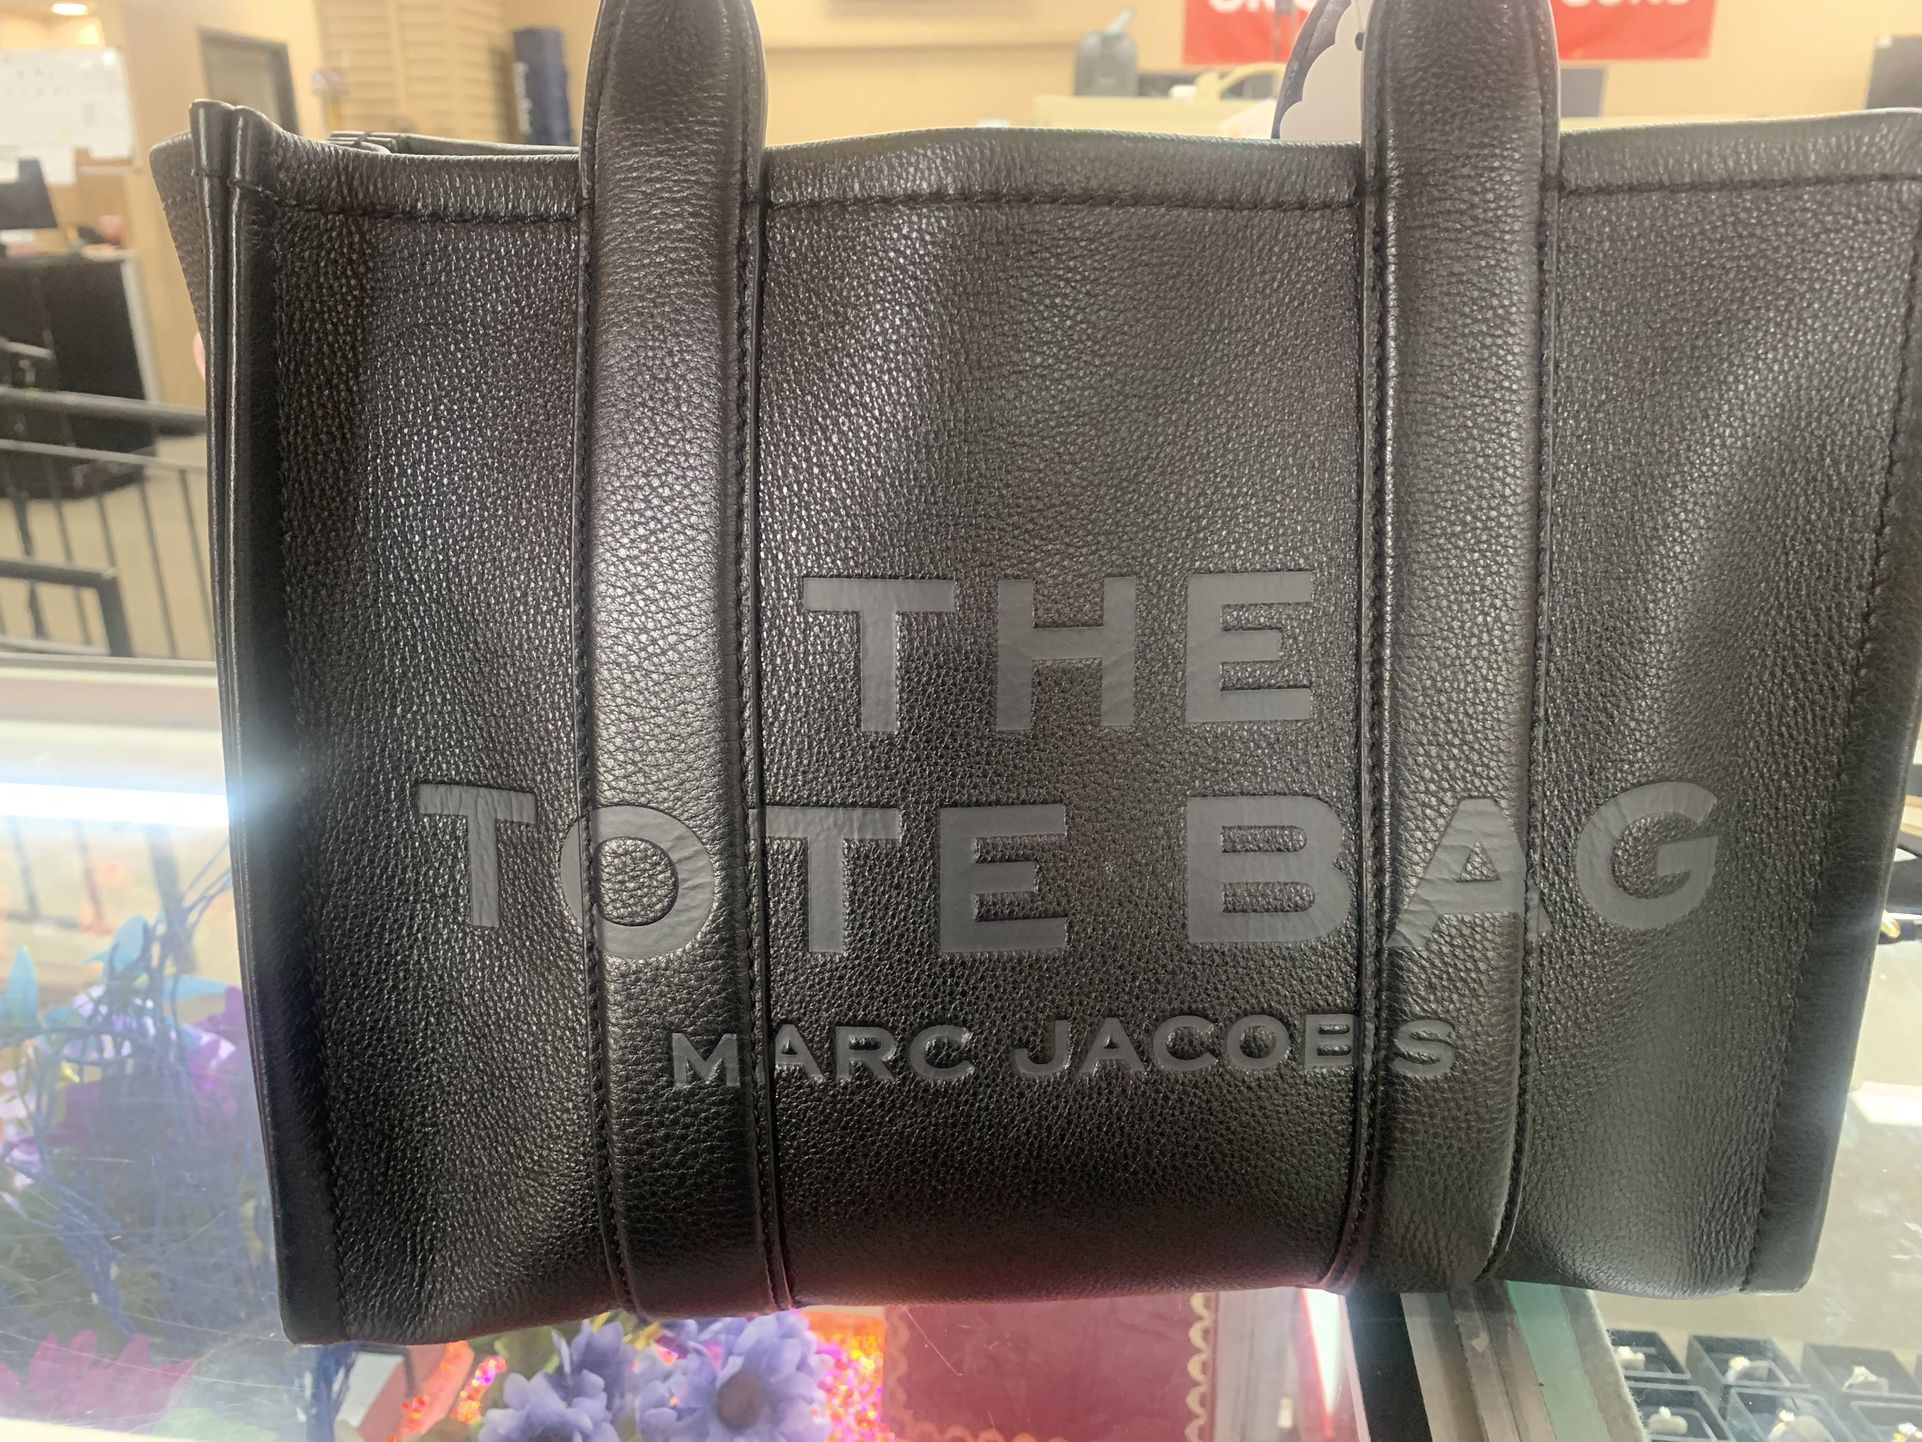 Marc Jacob’s Tote Bag‼️